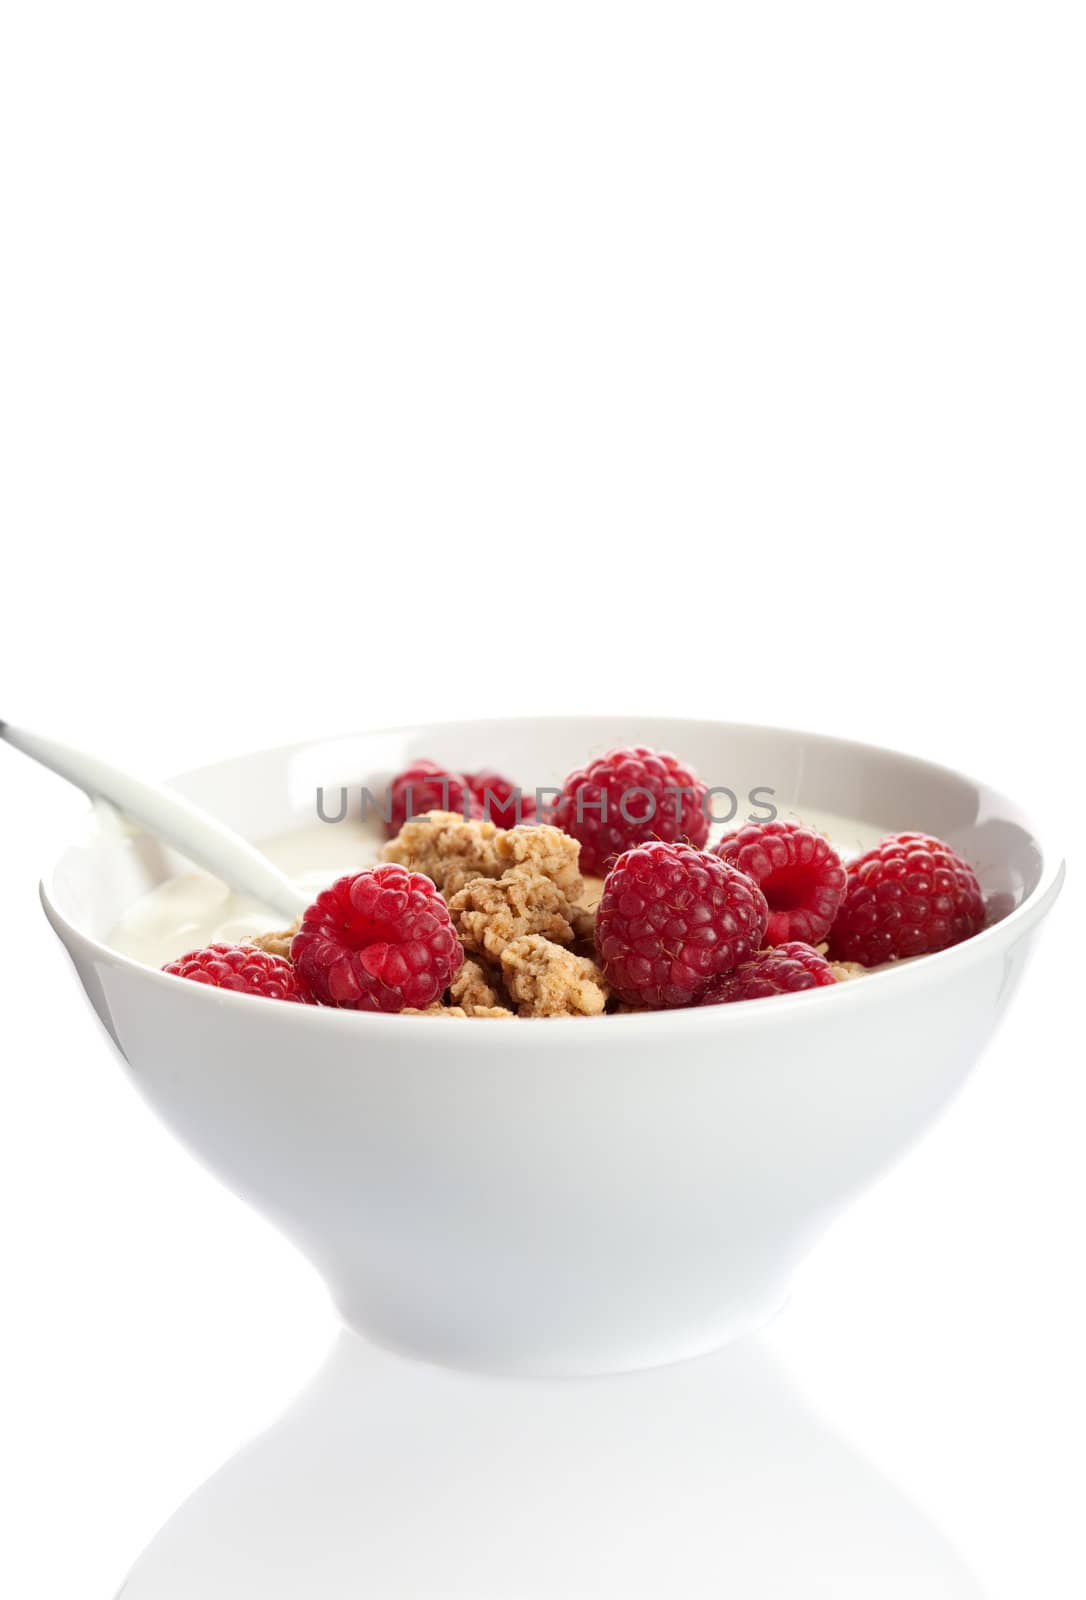 Small bowl filled with vanilla yogurt, raspberries and cruesli